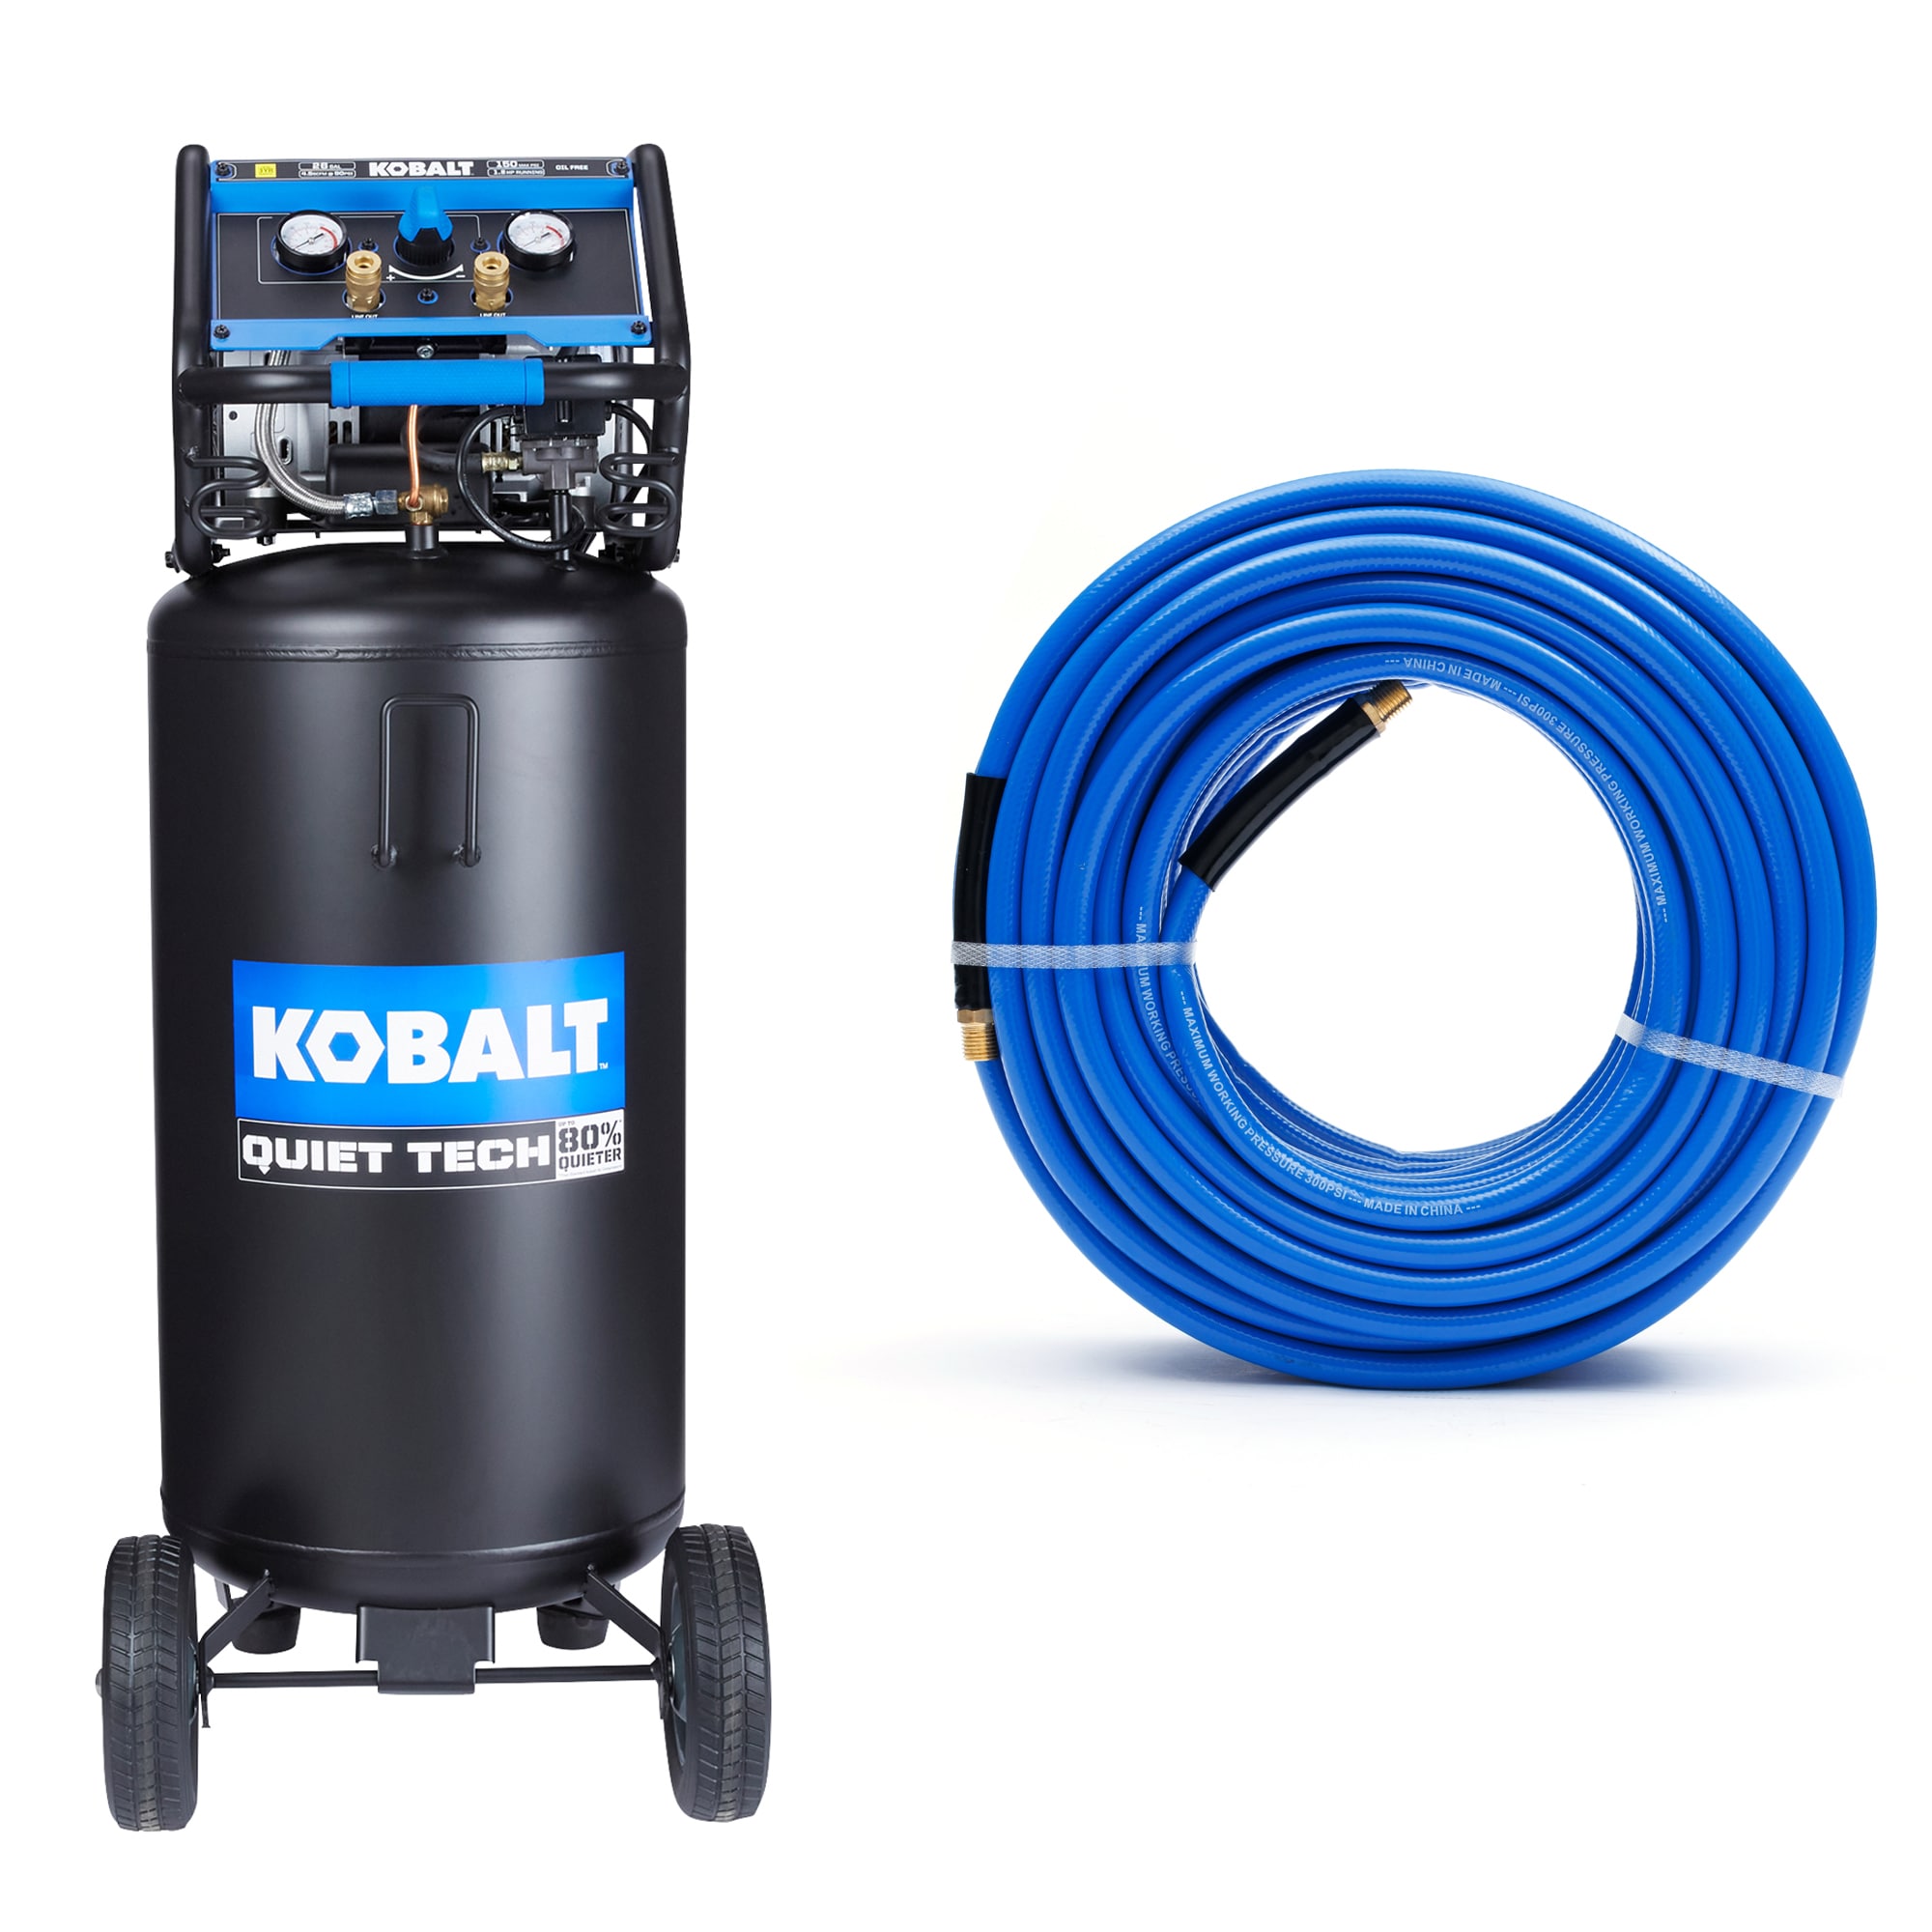 Kobalt Kobalt 3/8-in x 50-Ft PVC Air Hose in the Air Compressor